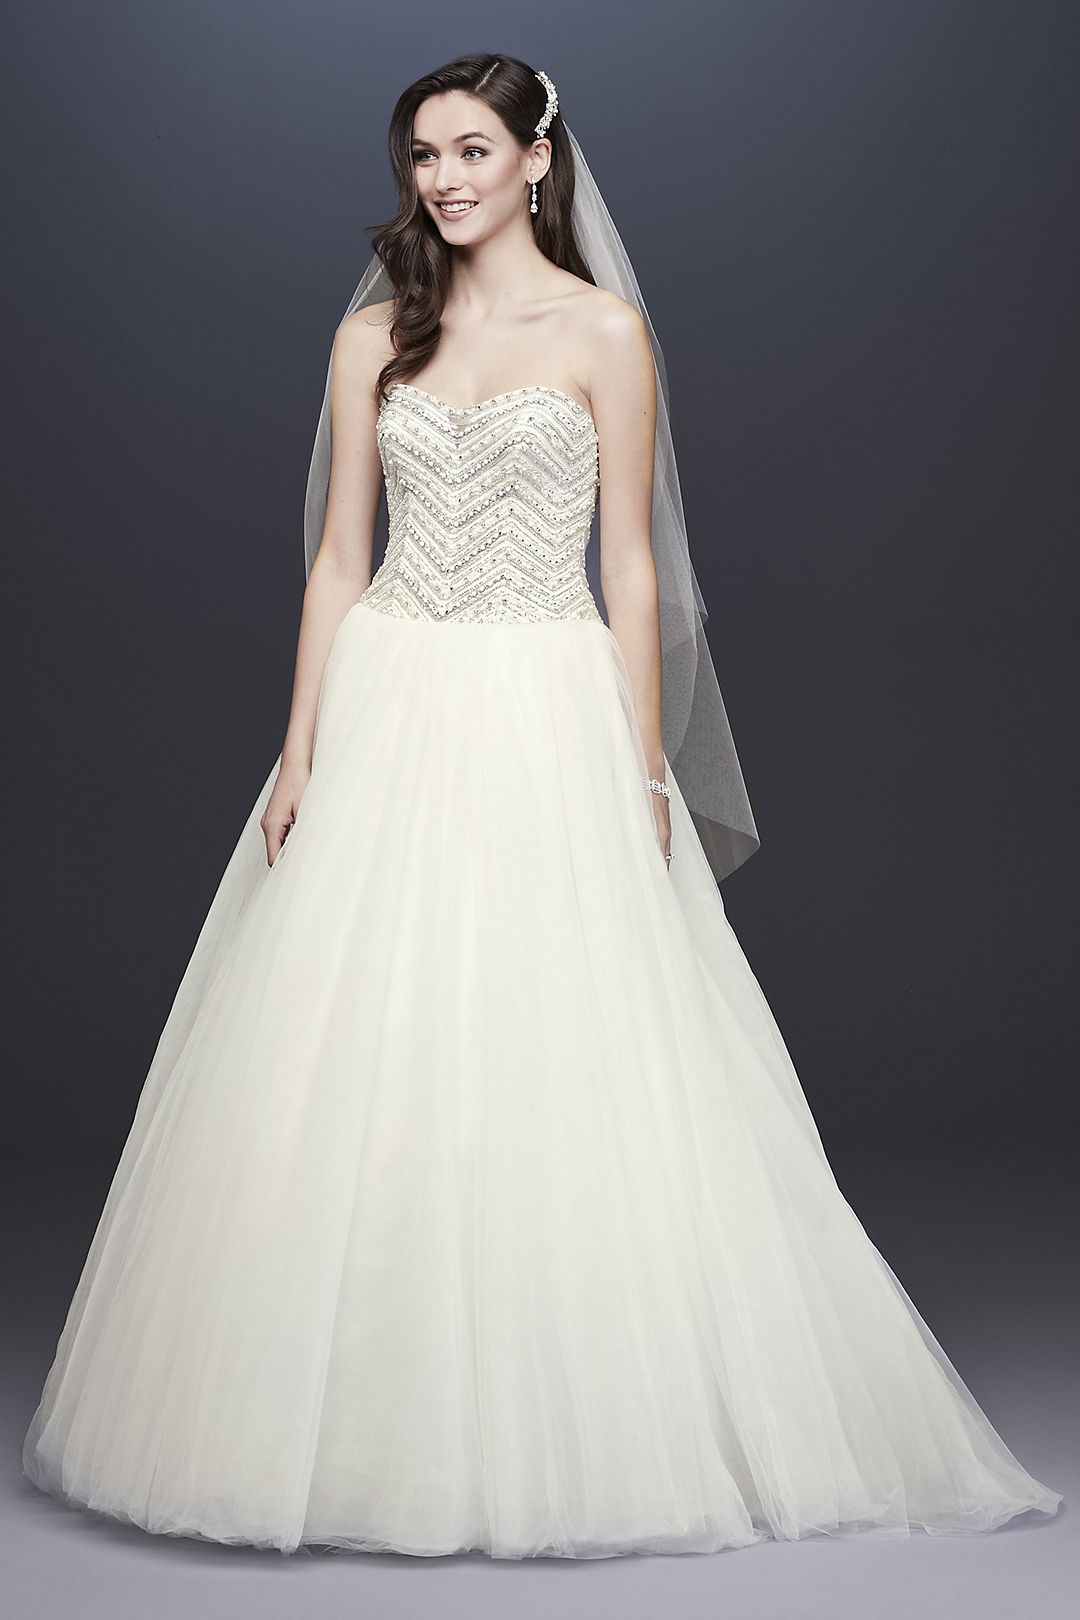 Jewel Crystal Chevron Tulle Wedding Dress Image 1